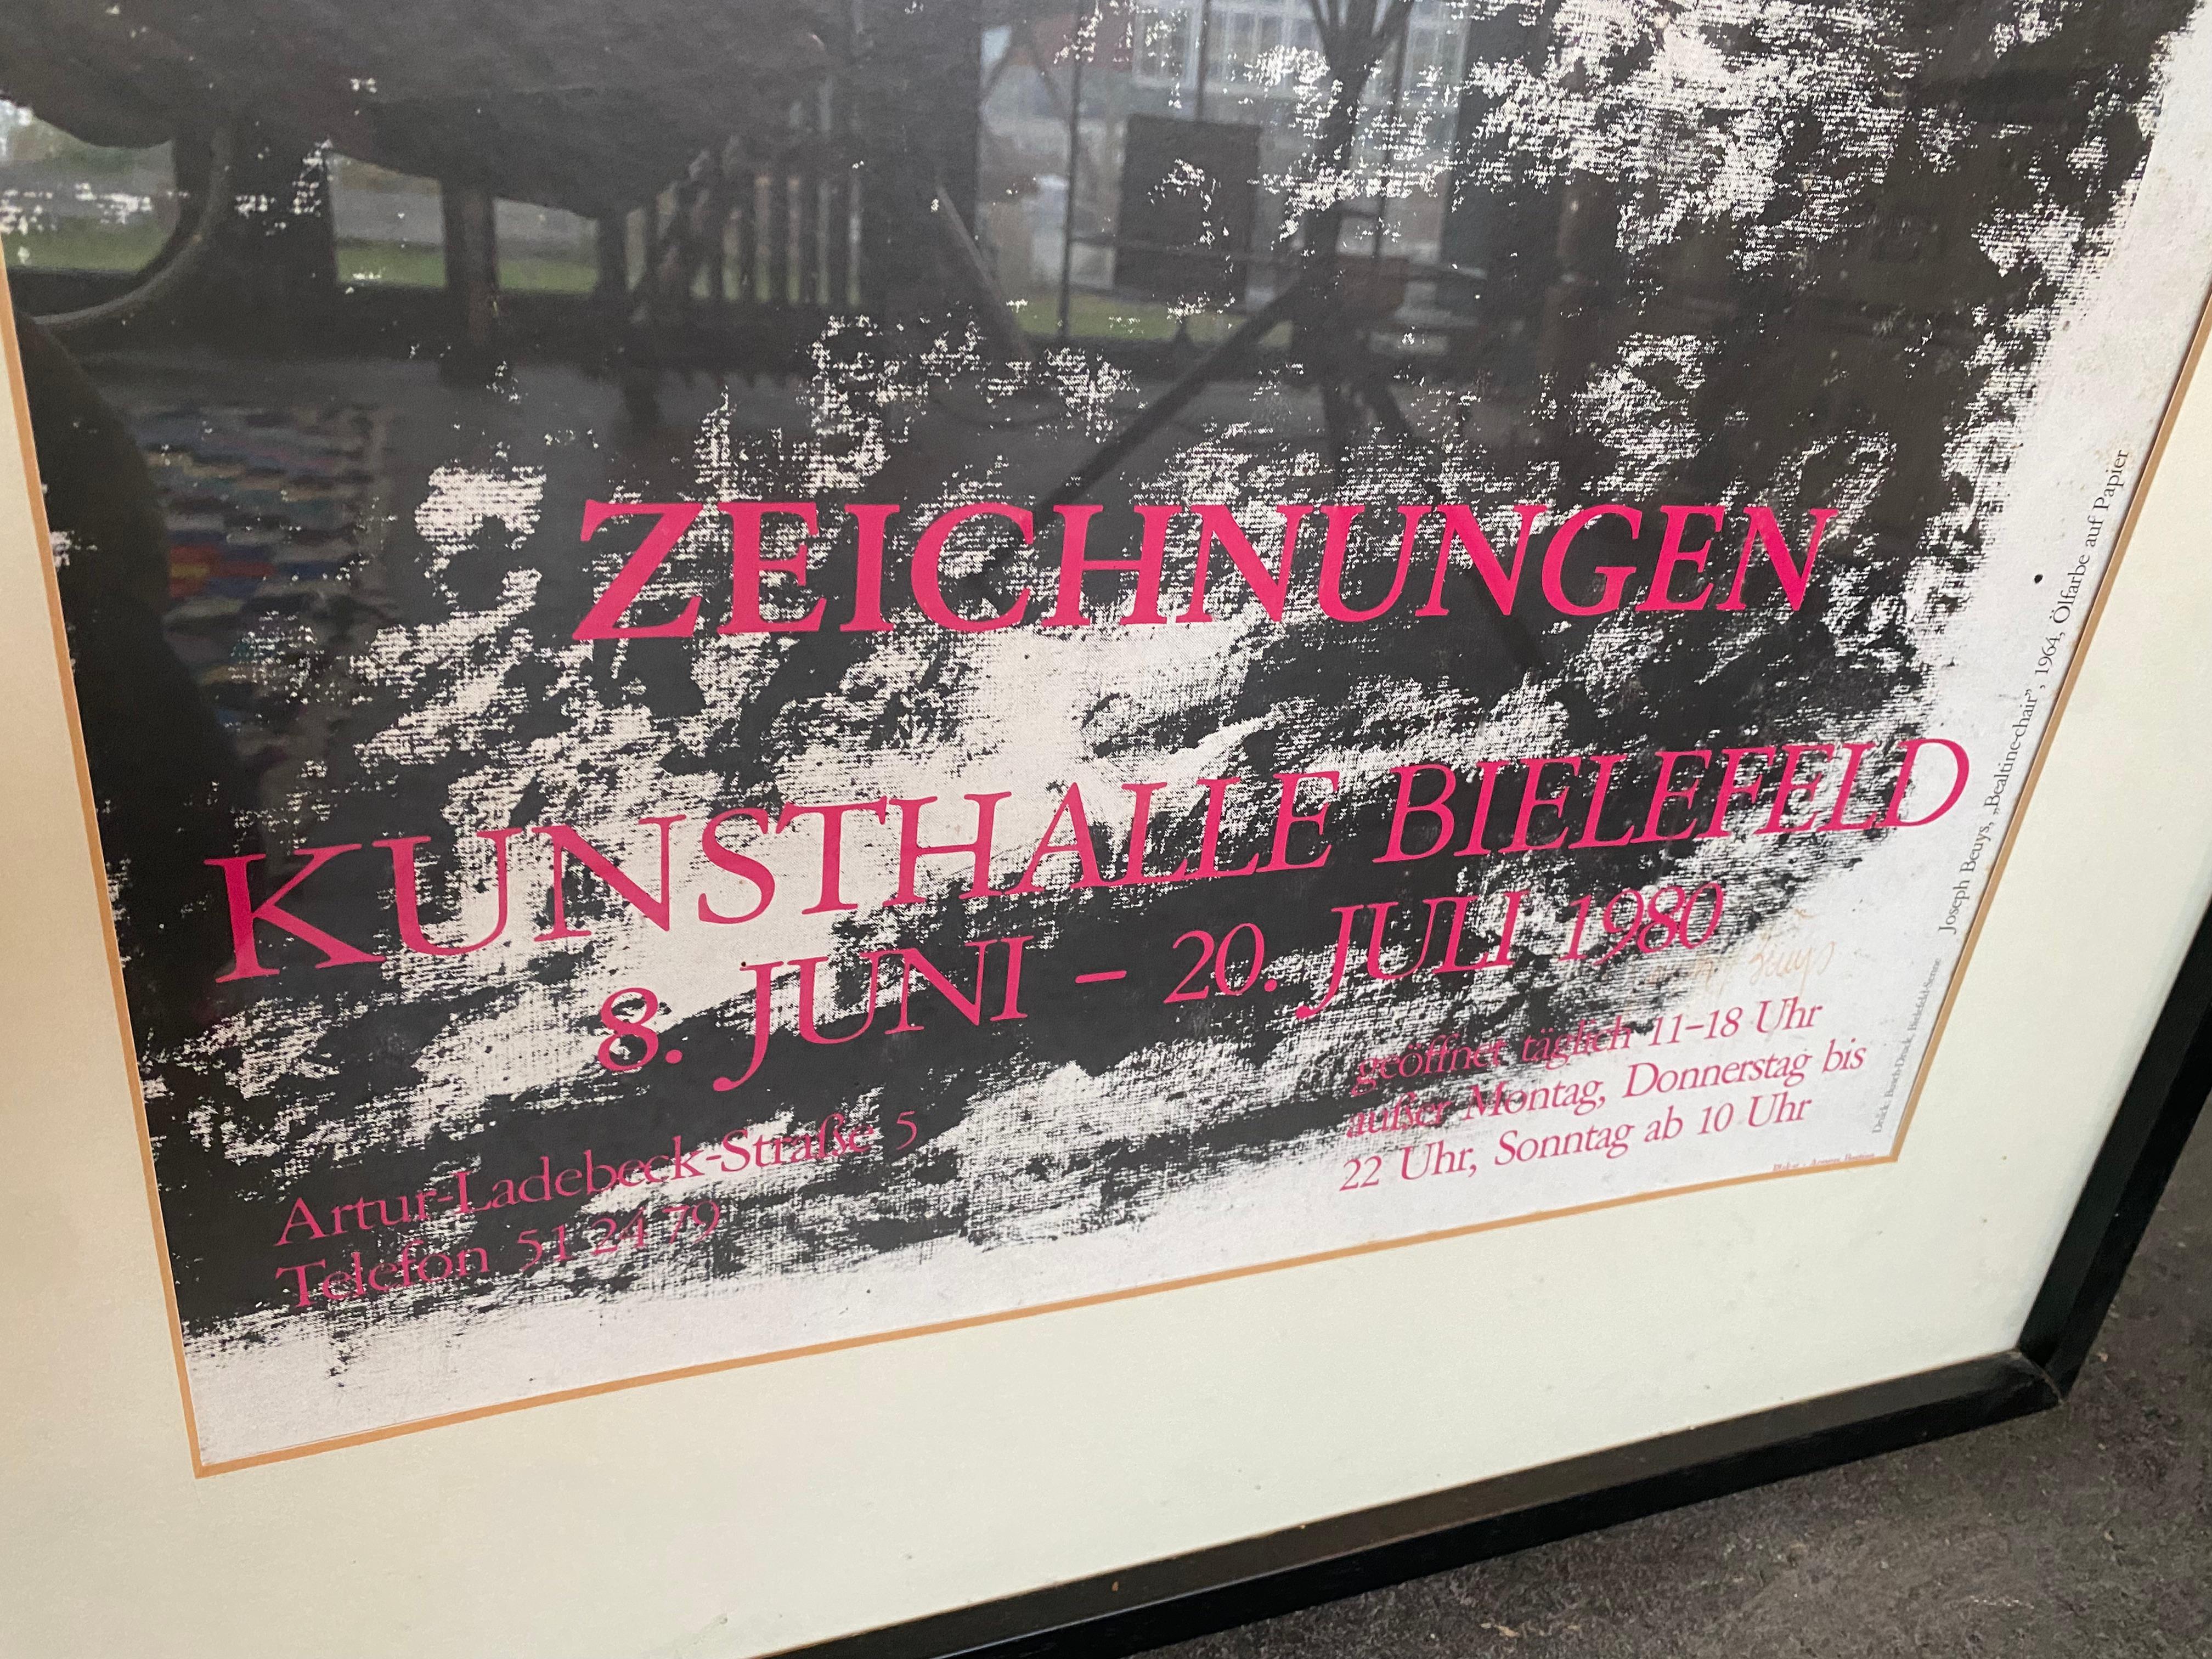 Original Signed Joseph Beuys Exhibition Poster 1980 Framed 